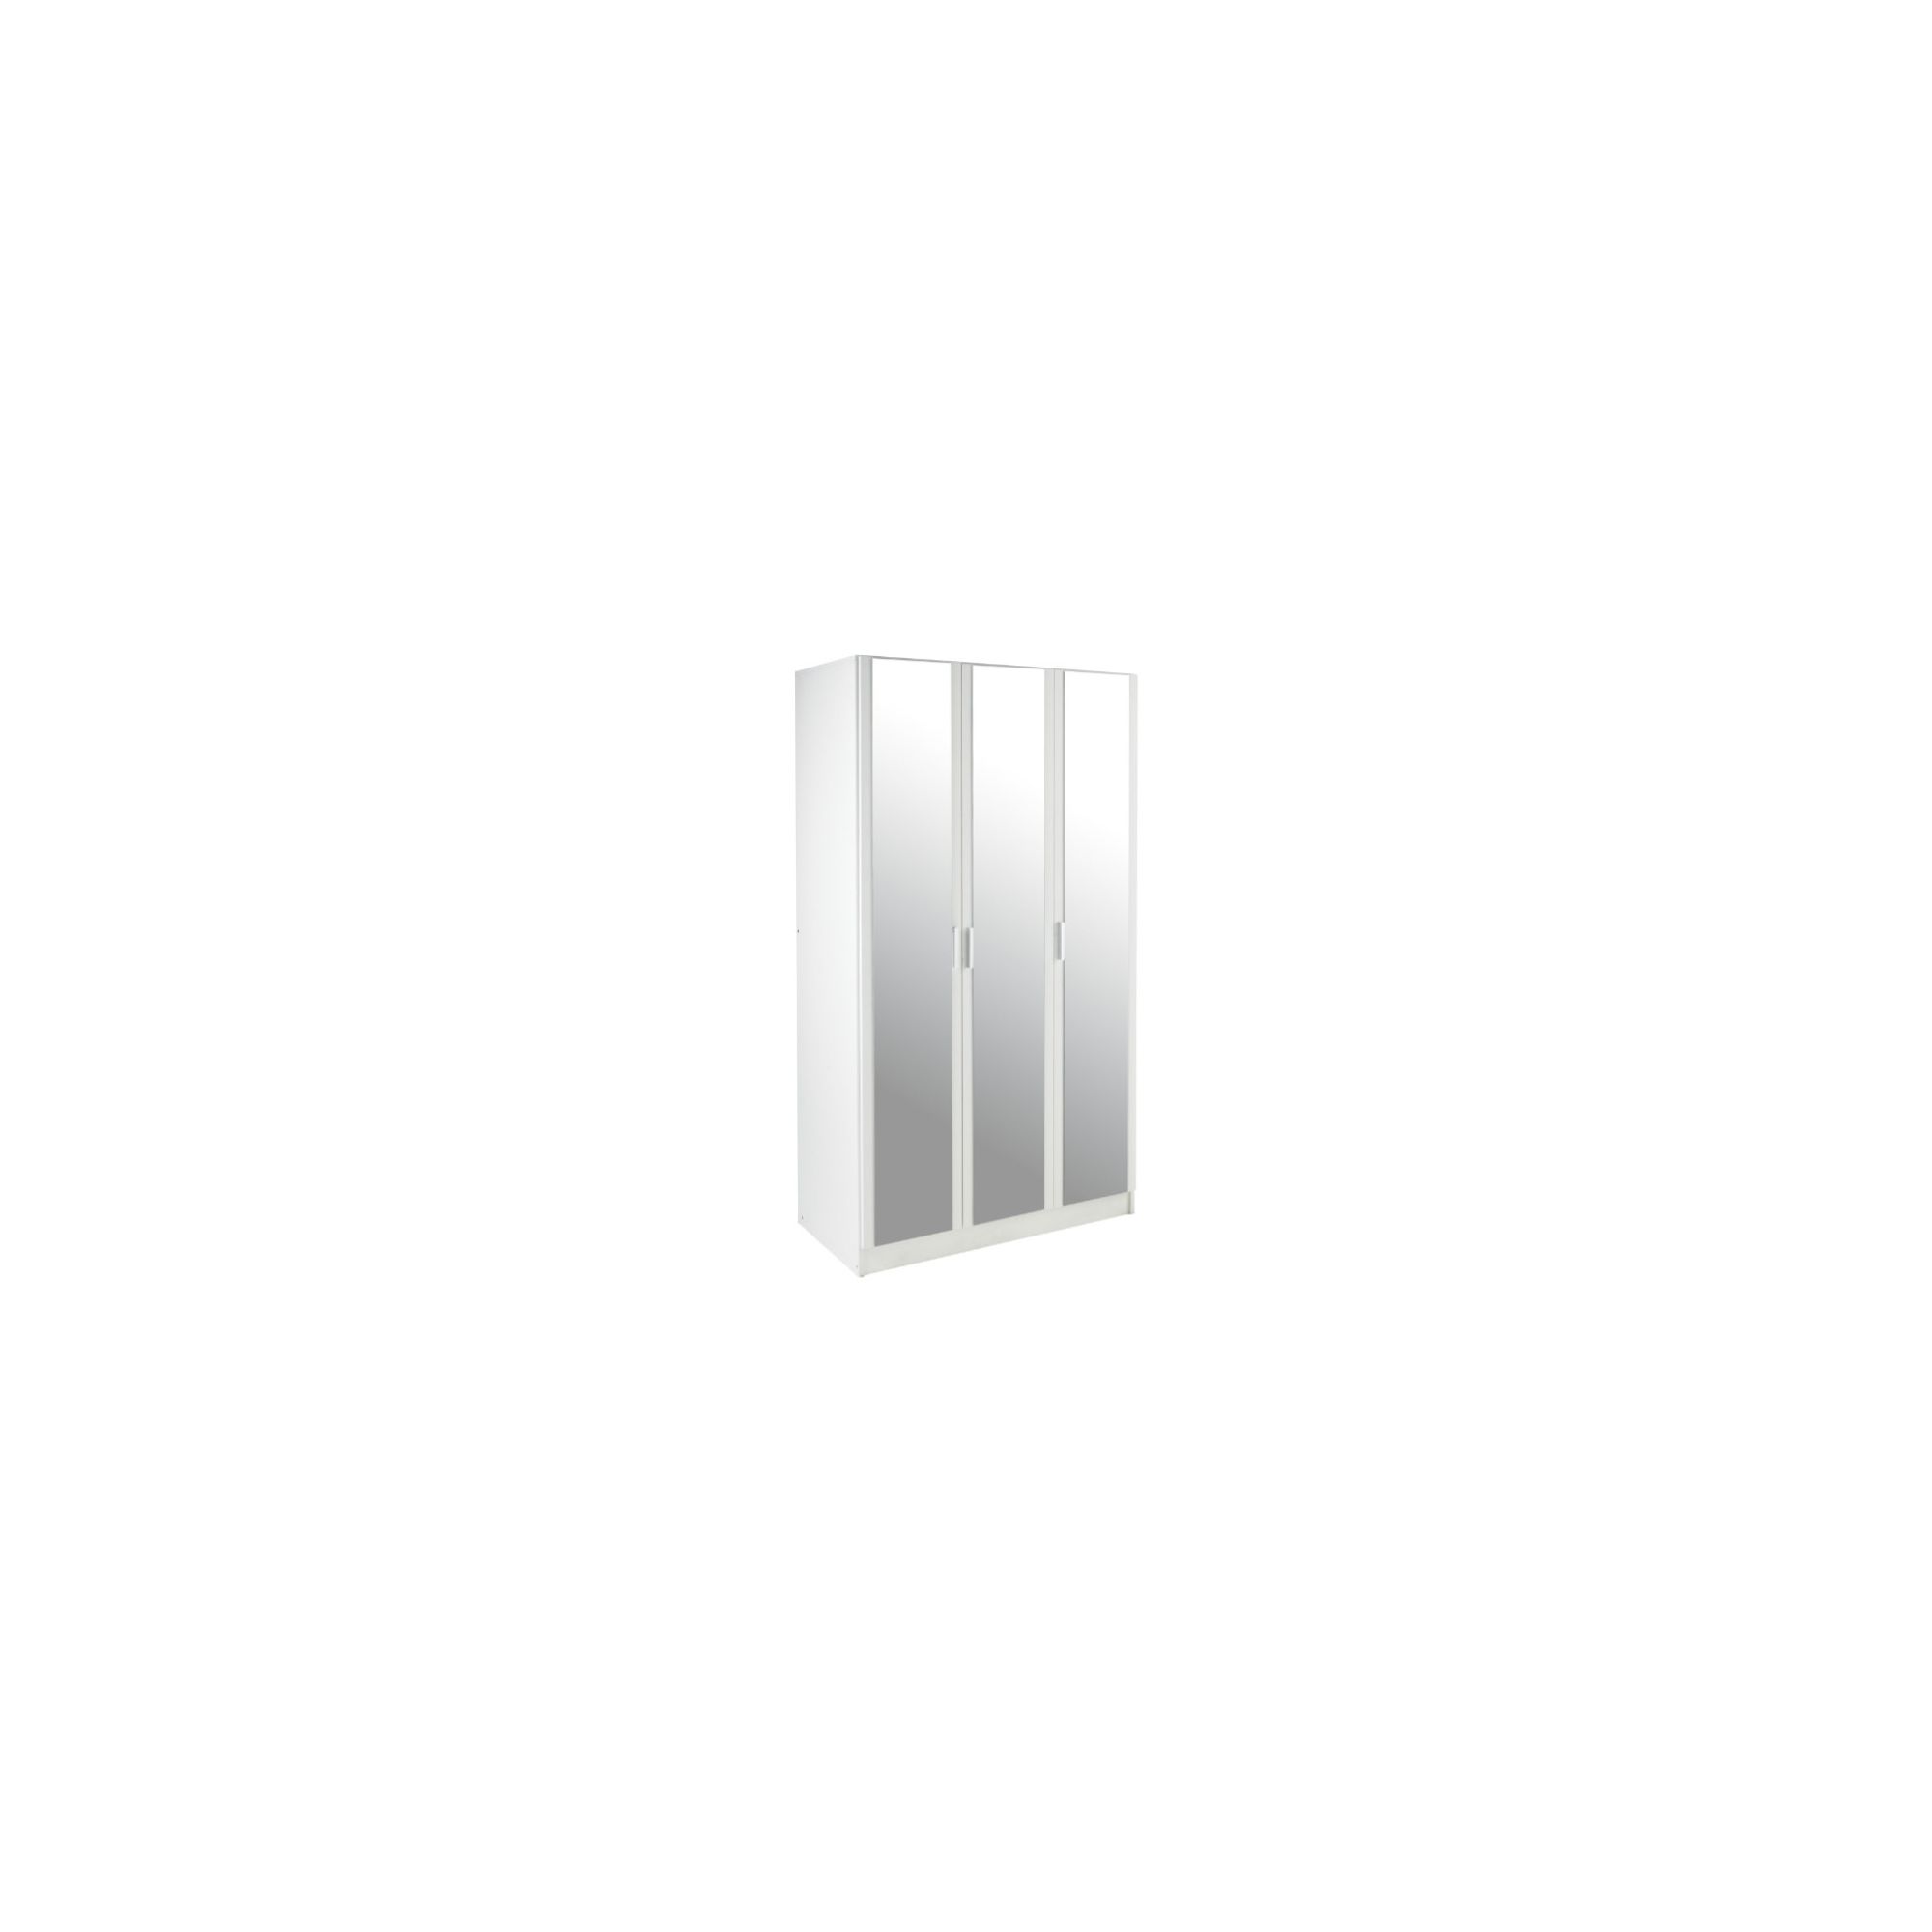 Kit Form Bella 3 Door Mirrored Wardrobe - White at Tesco Direct